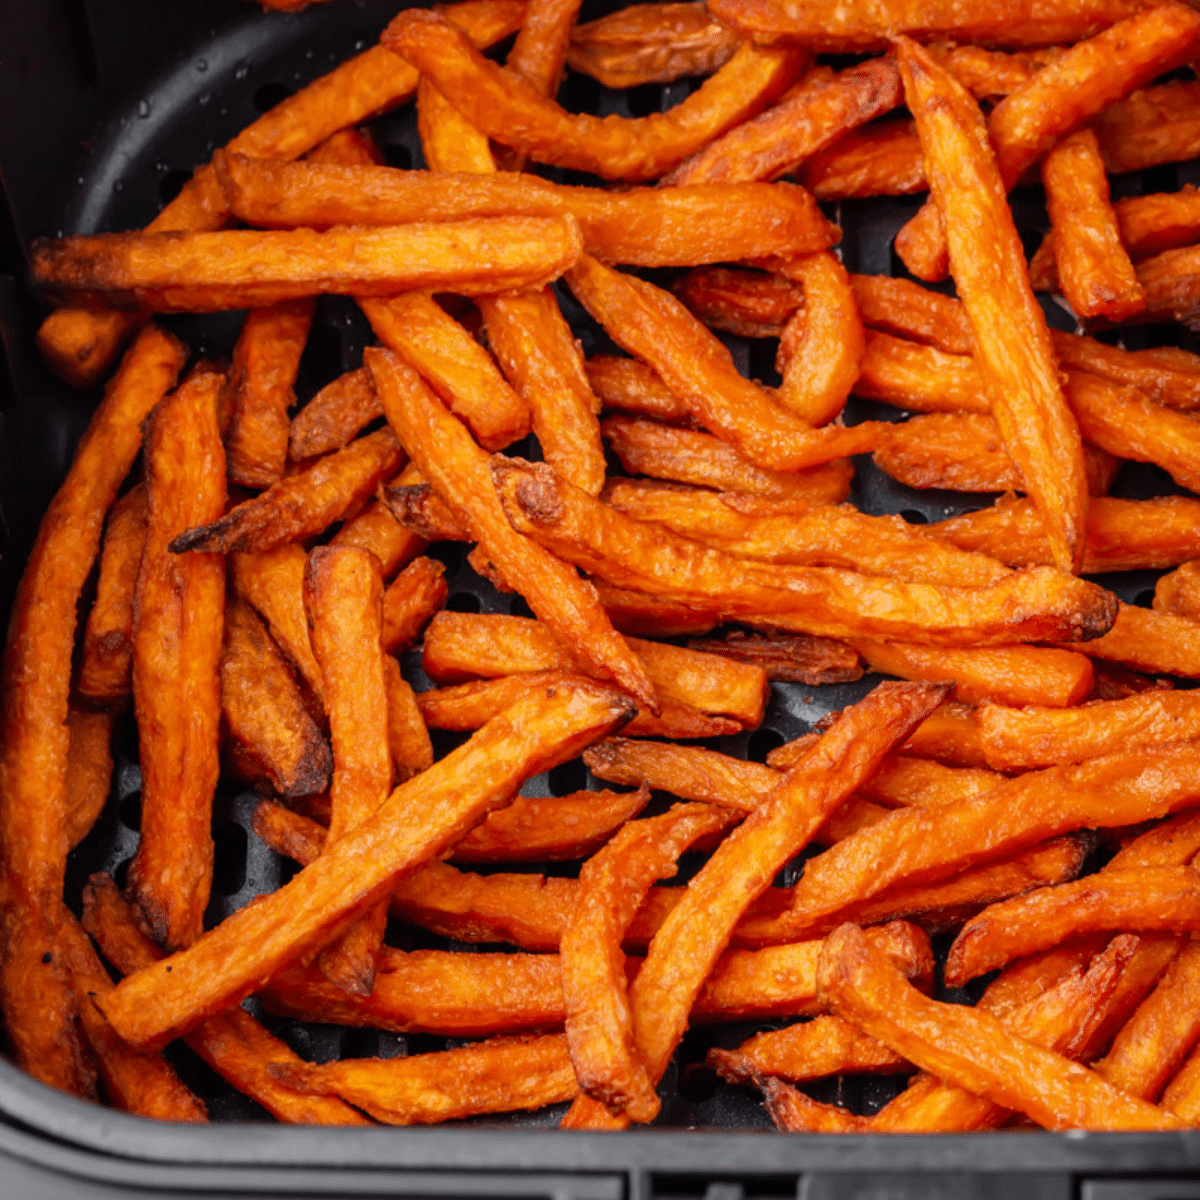 Frozen Sweet Potatoes Fries in Air Fryer